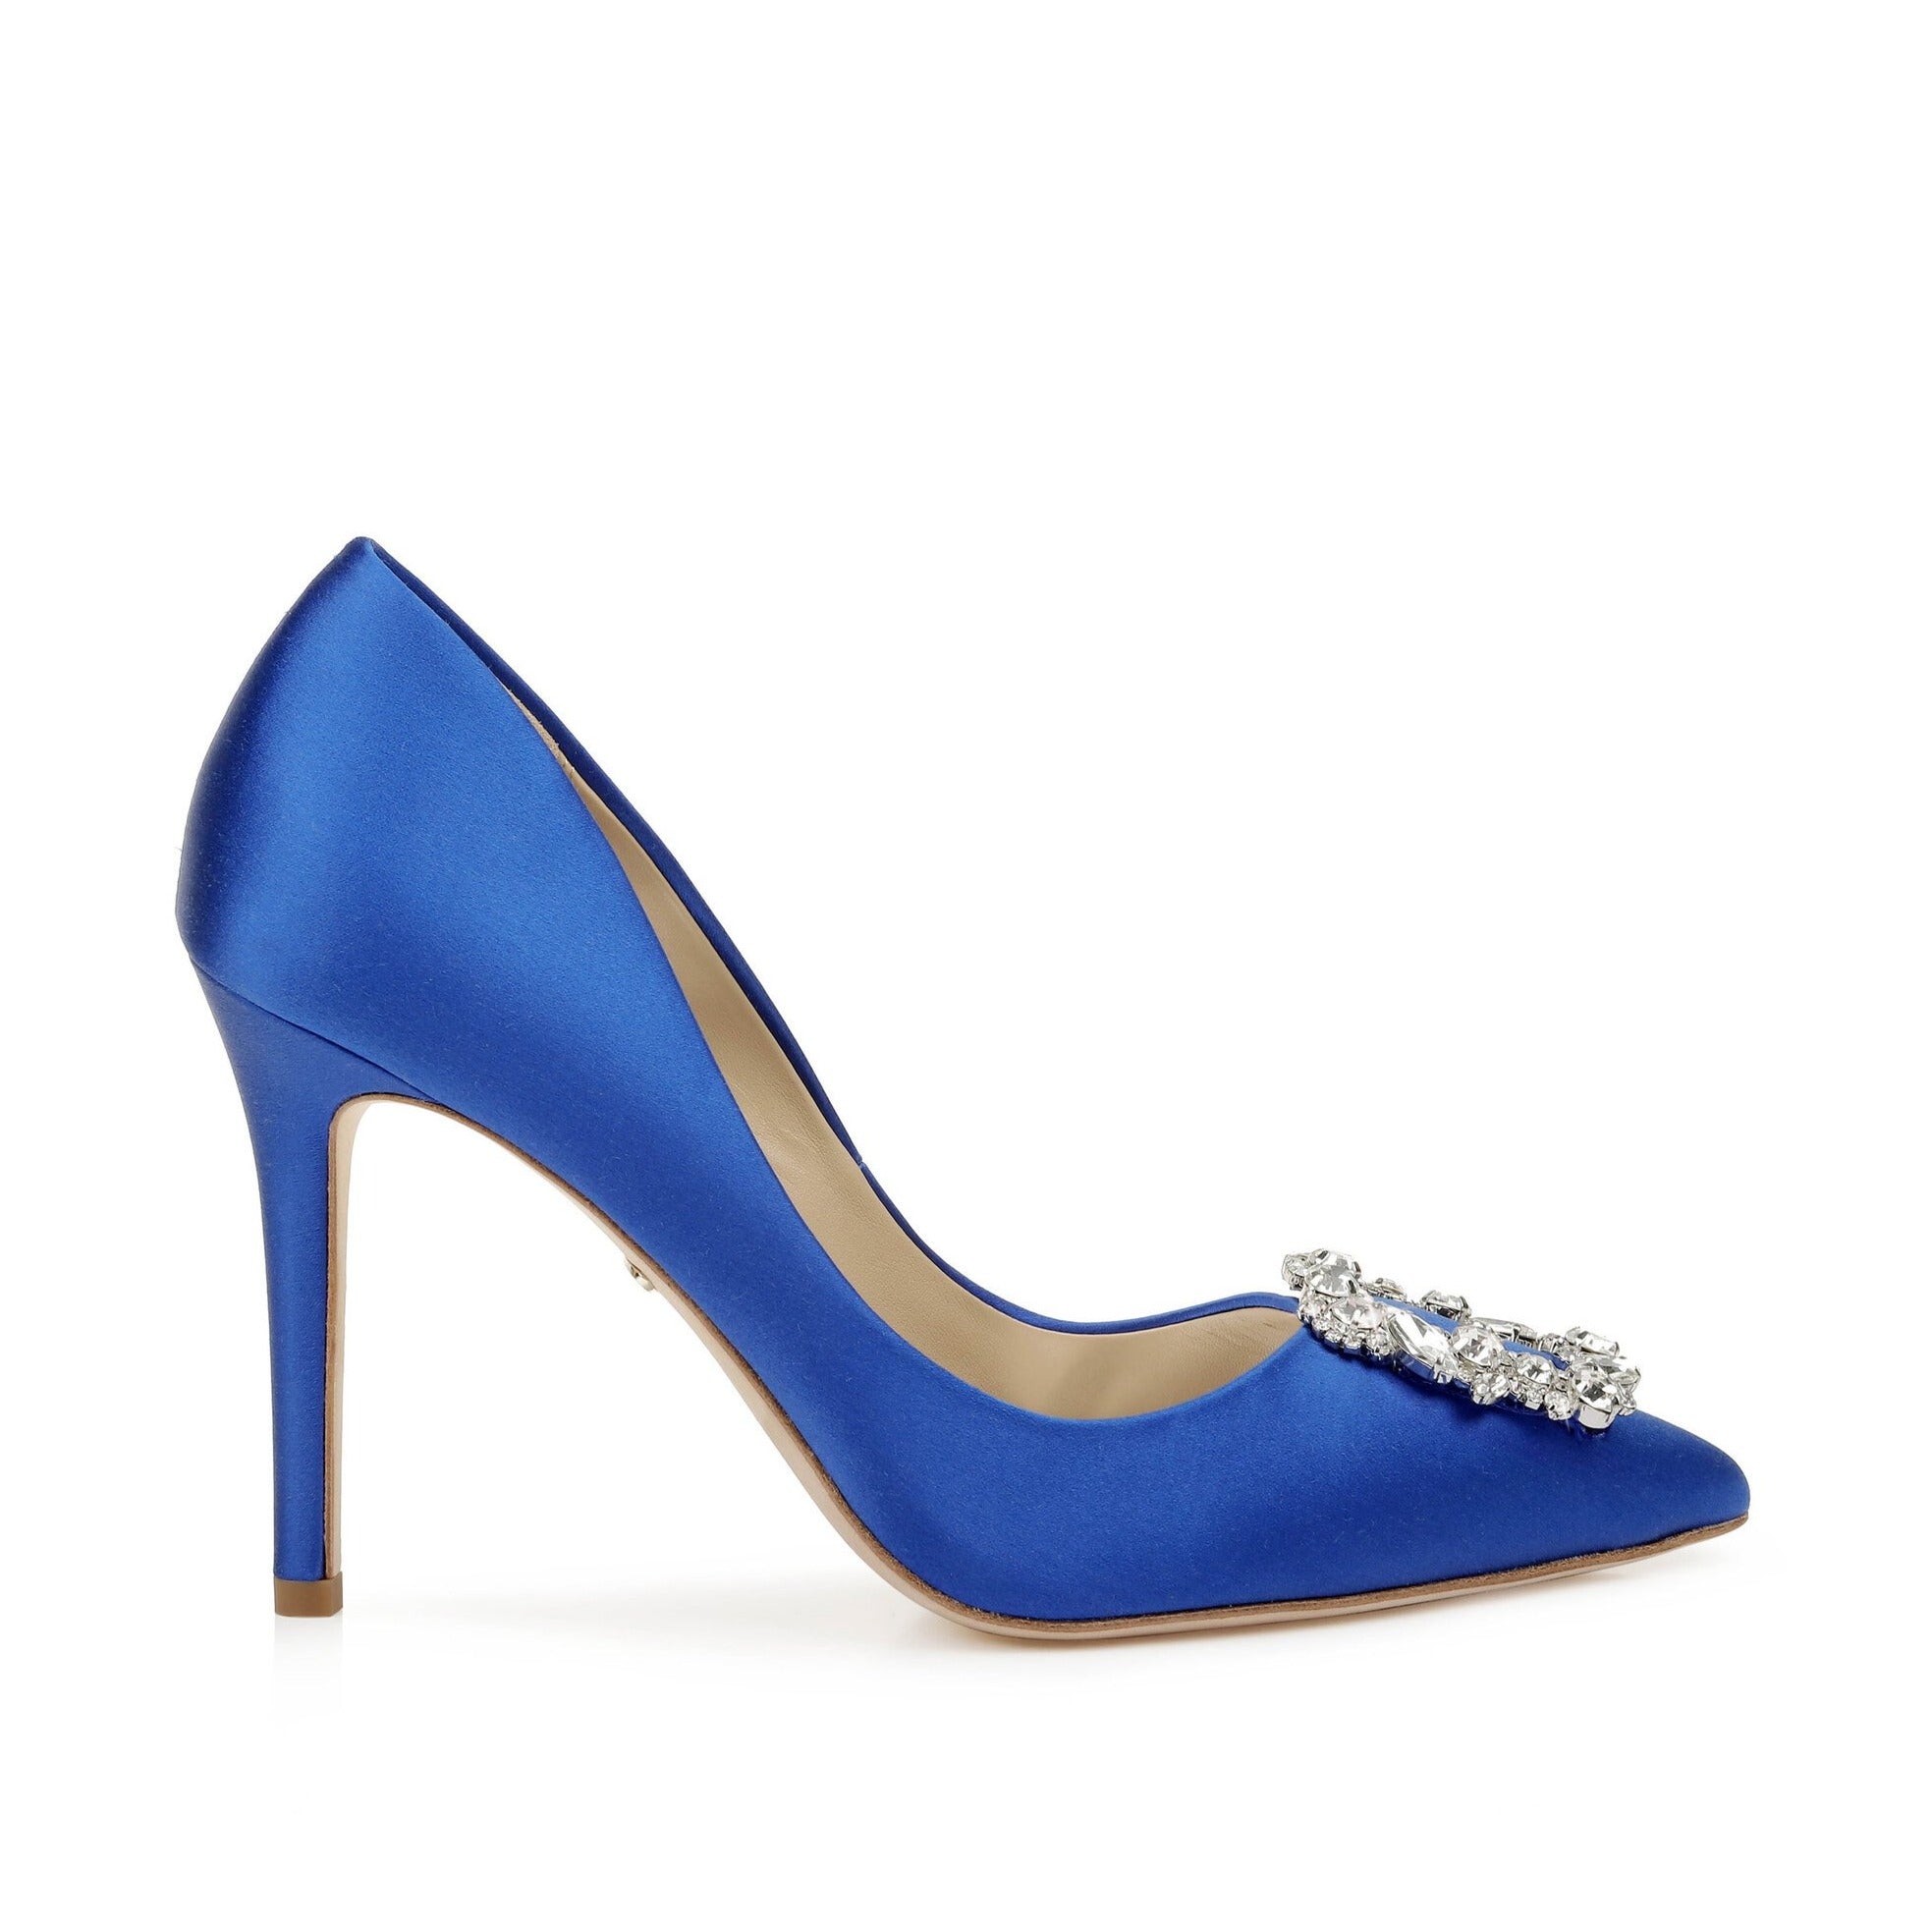 Badgley Mischka Cher Buckle Pointed Wedding Shoes - Blue